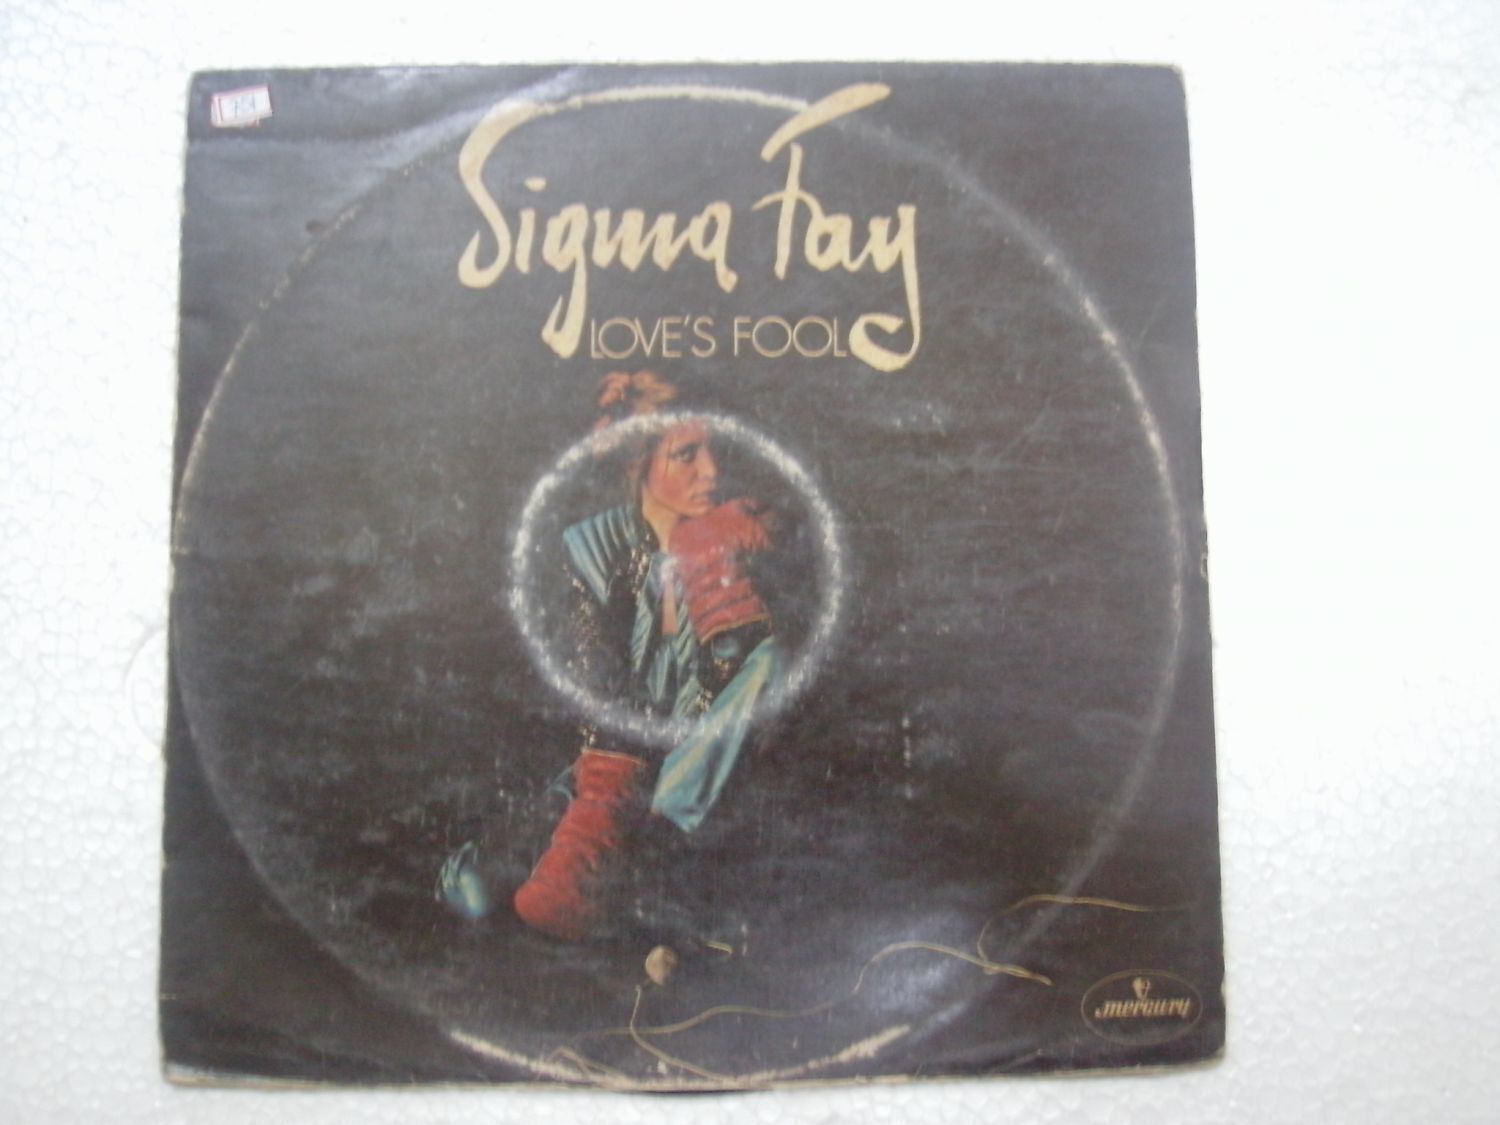 SIGMA FAY LOVES FOOL  RARE LP RECORD vinyl 1979 INDIA INDIAN ex